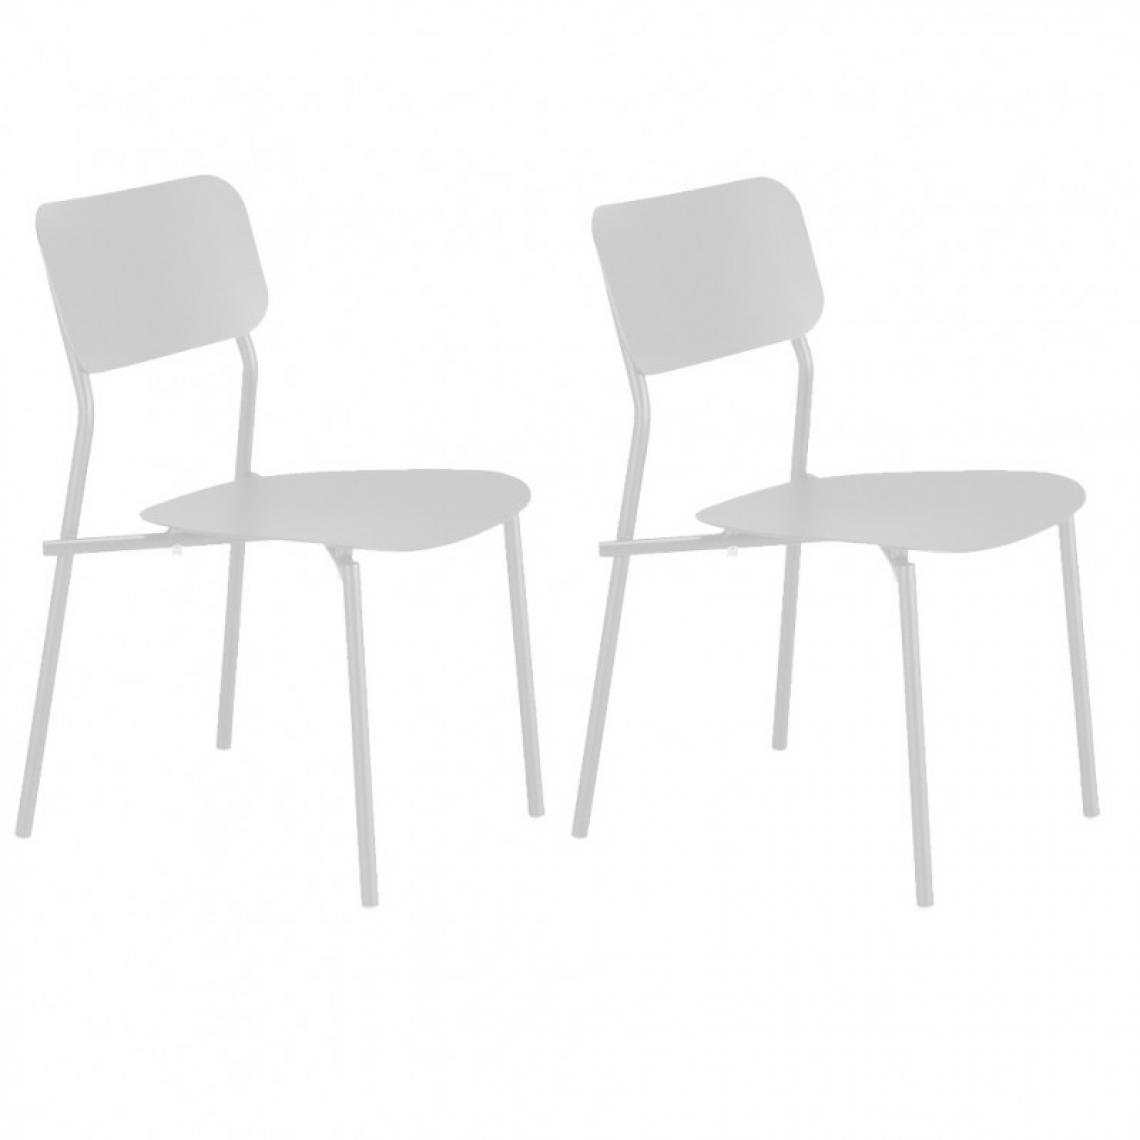 Meubletmoi - Lot de 2 chaises de jardin minimaliste en aluminium gris - STELLA 7668 - Chaises de jardin